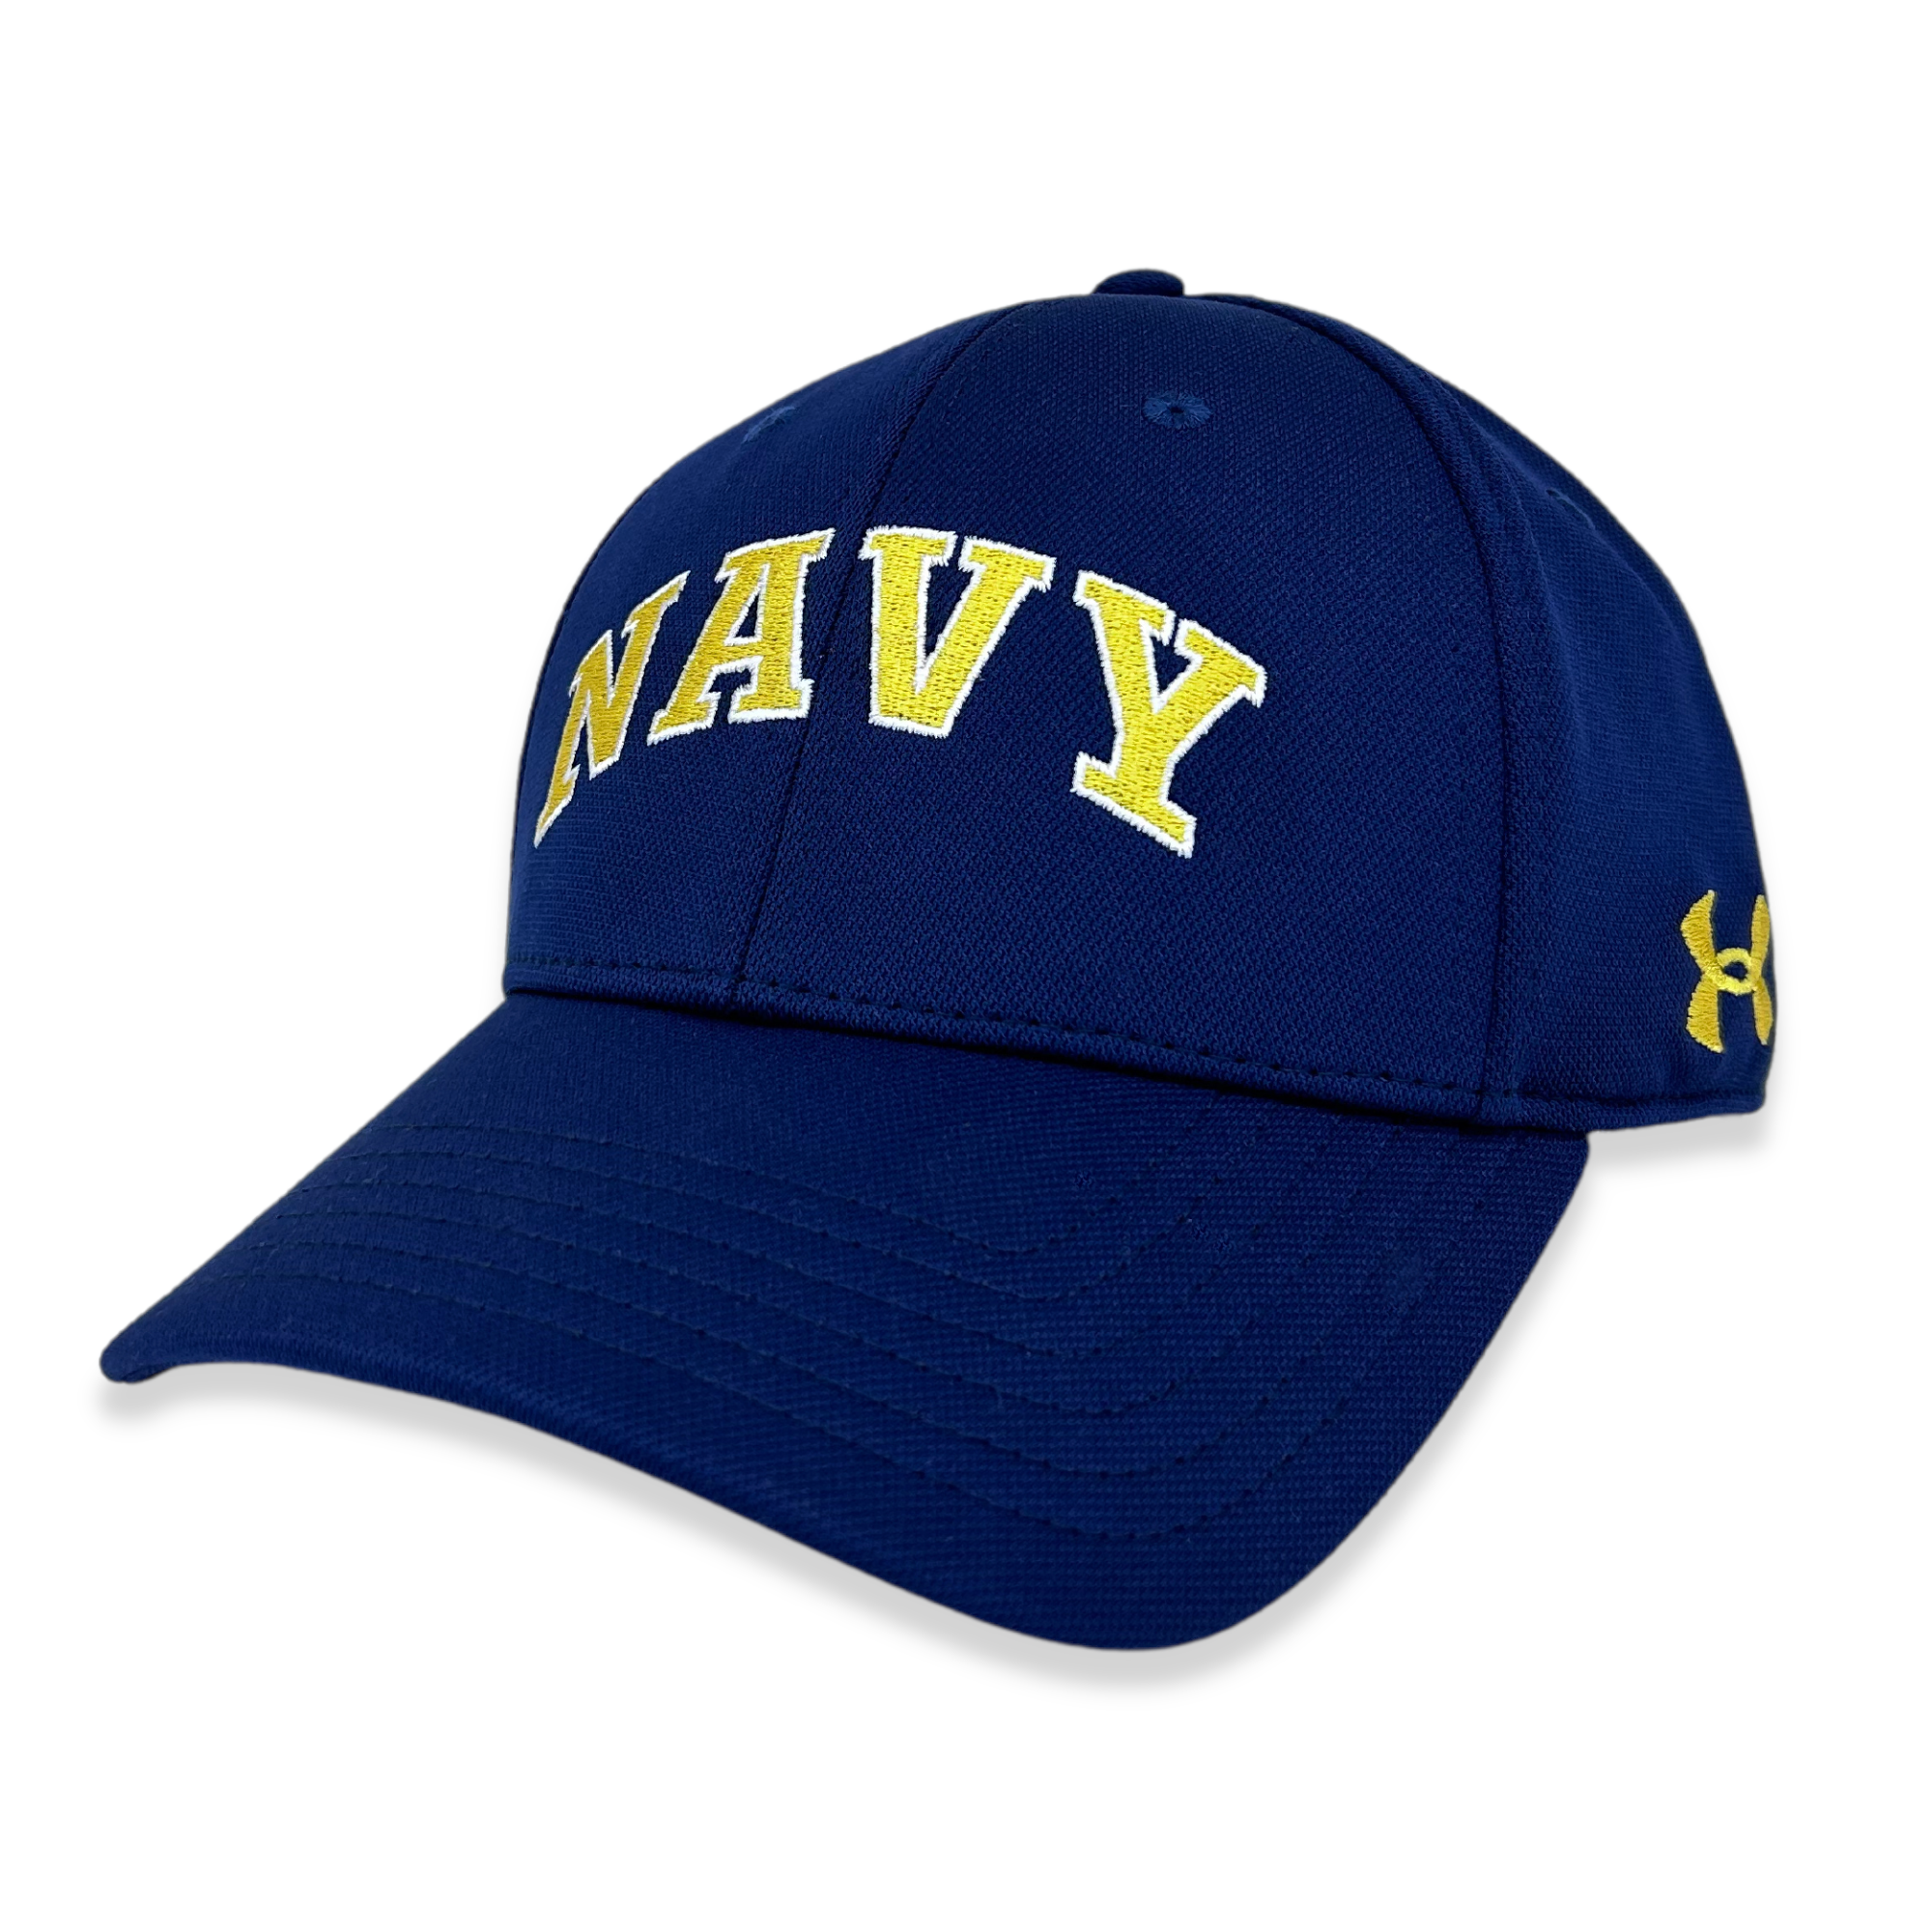 Navy Under Armour Blitzing Flex (Navy) Fit Hat